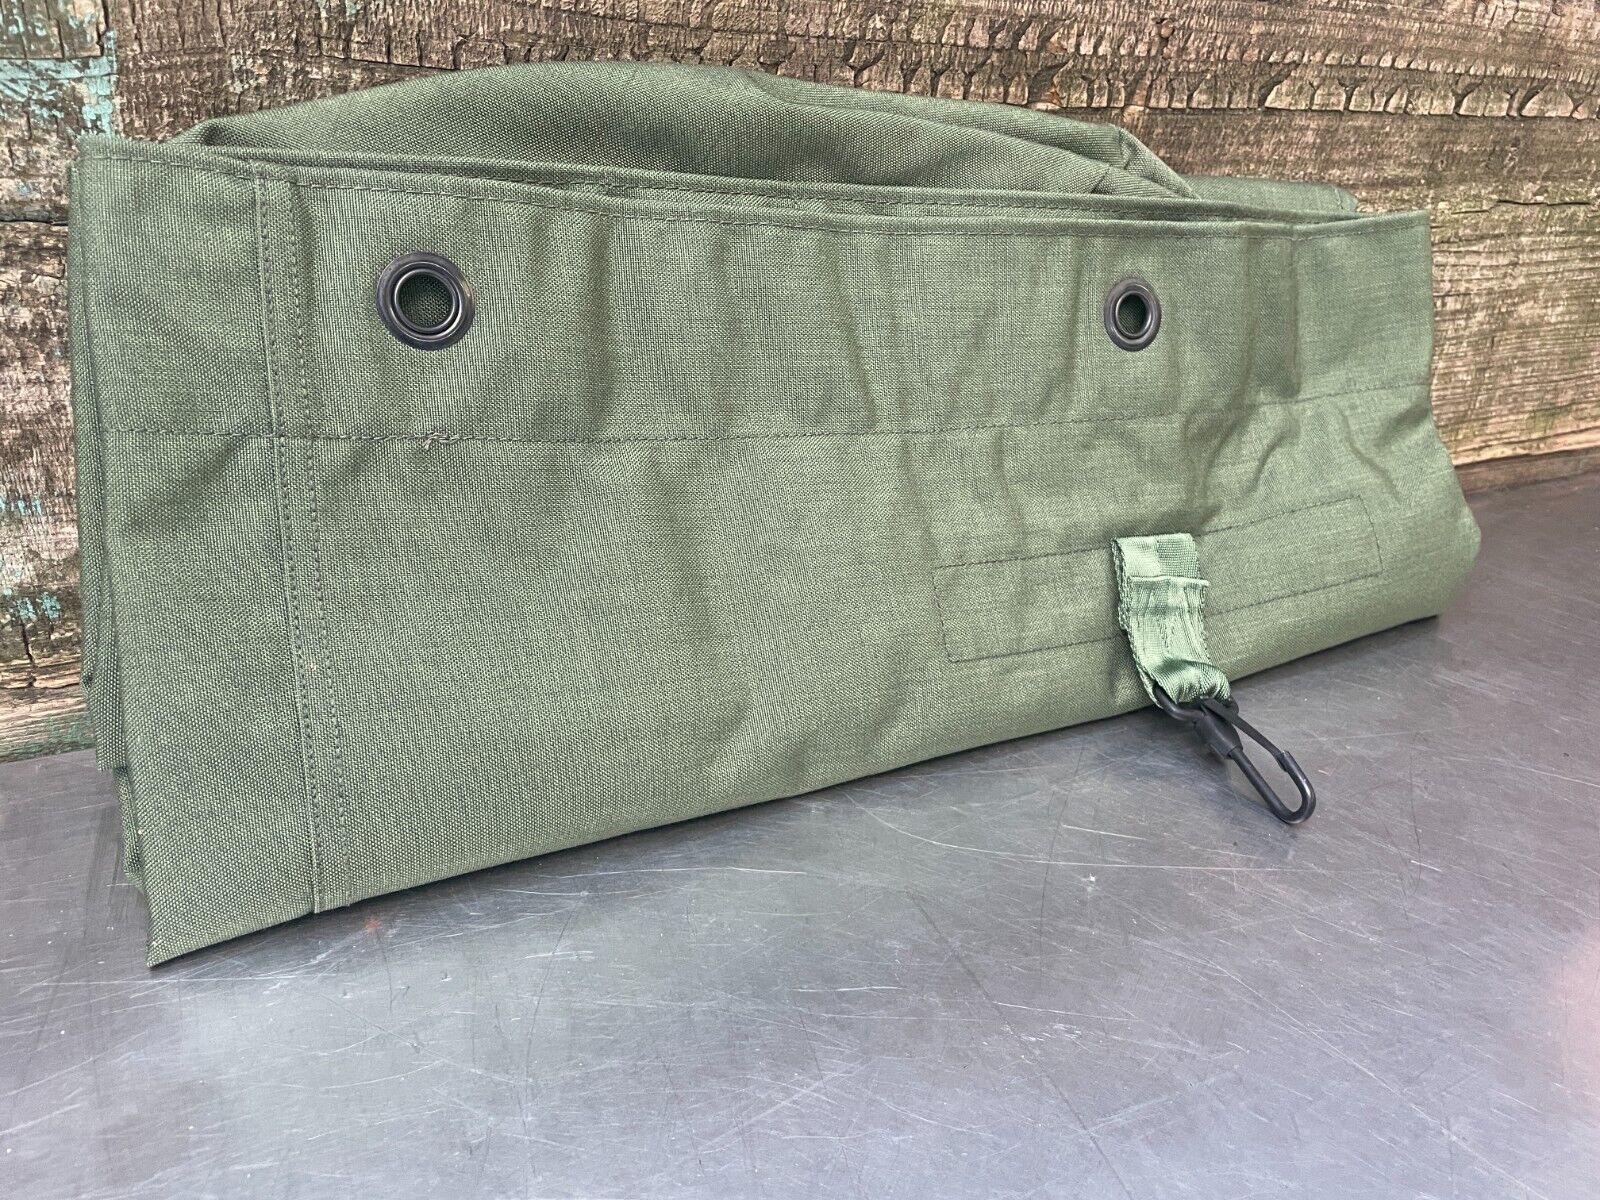 -NEW- US Military Army Duffle Duffel Bag, OD Green, HD Nylon, Top Load